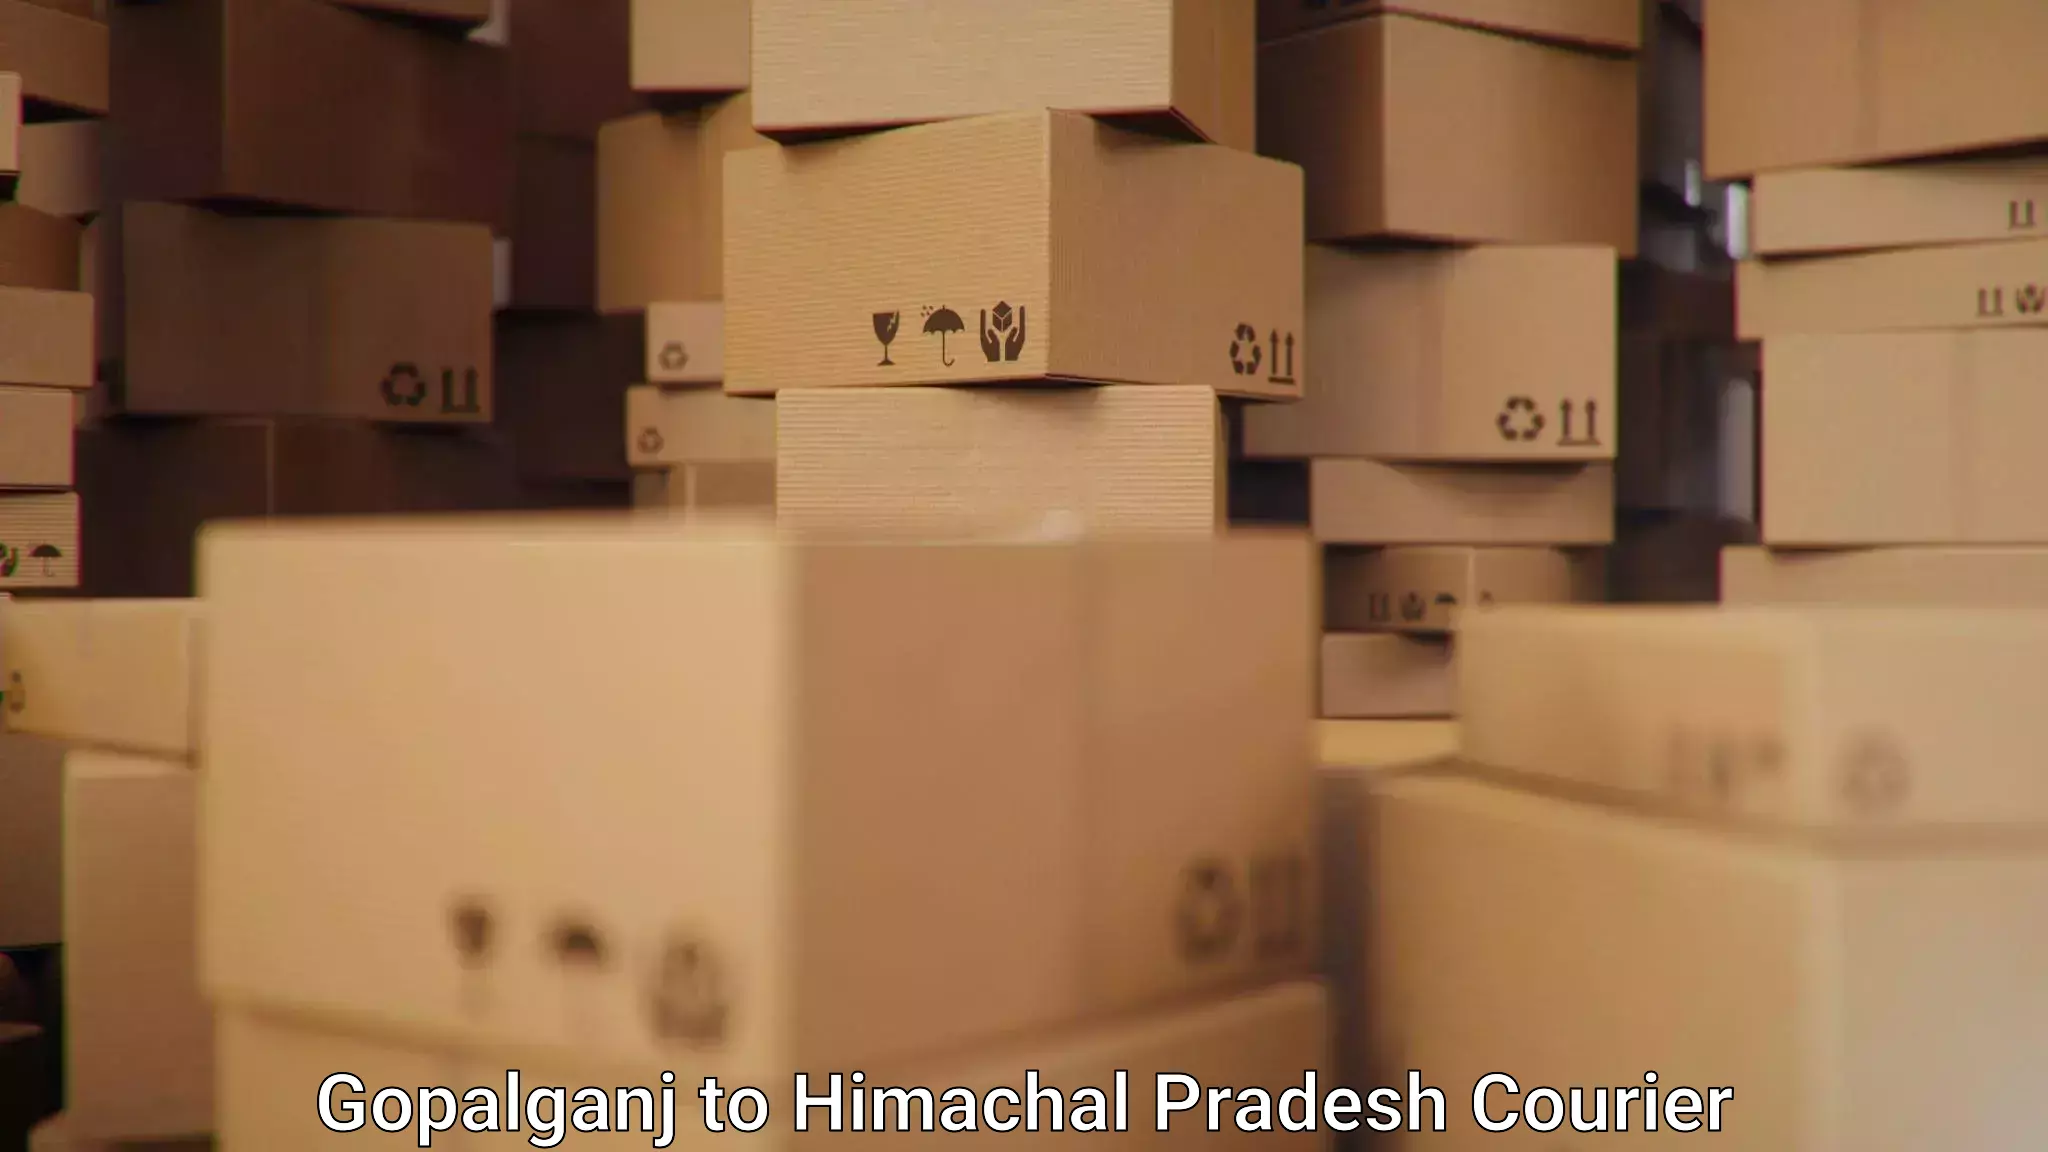 Advanced delivery network Gopalganj to Himachal Pradesh